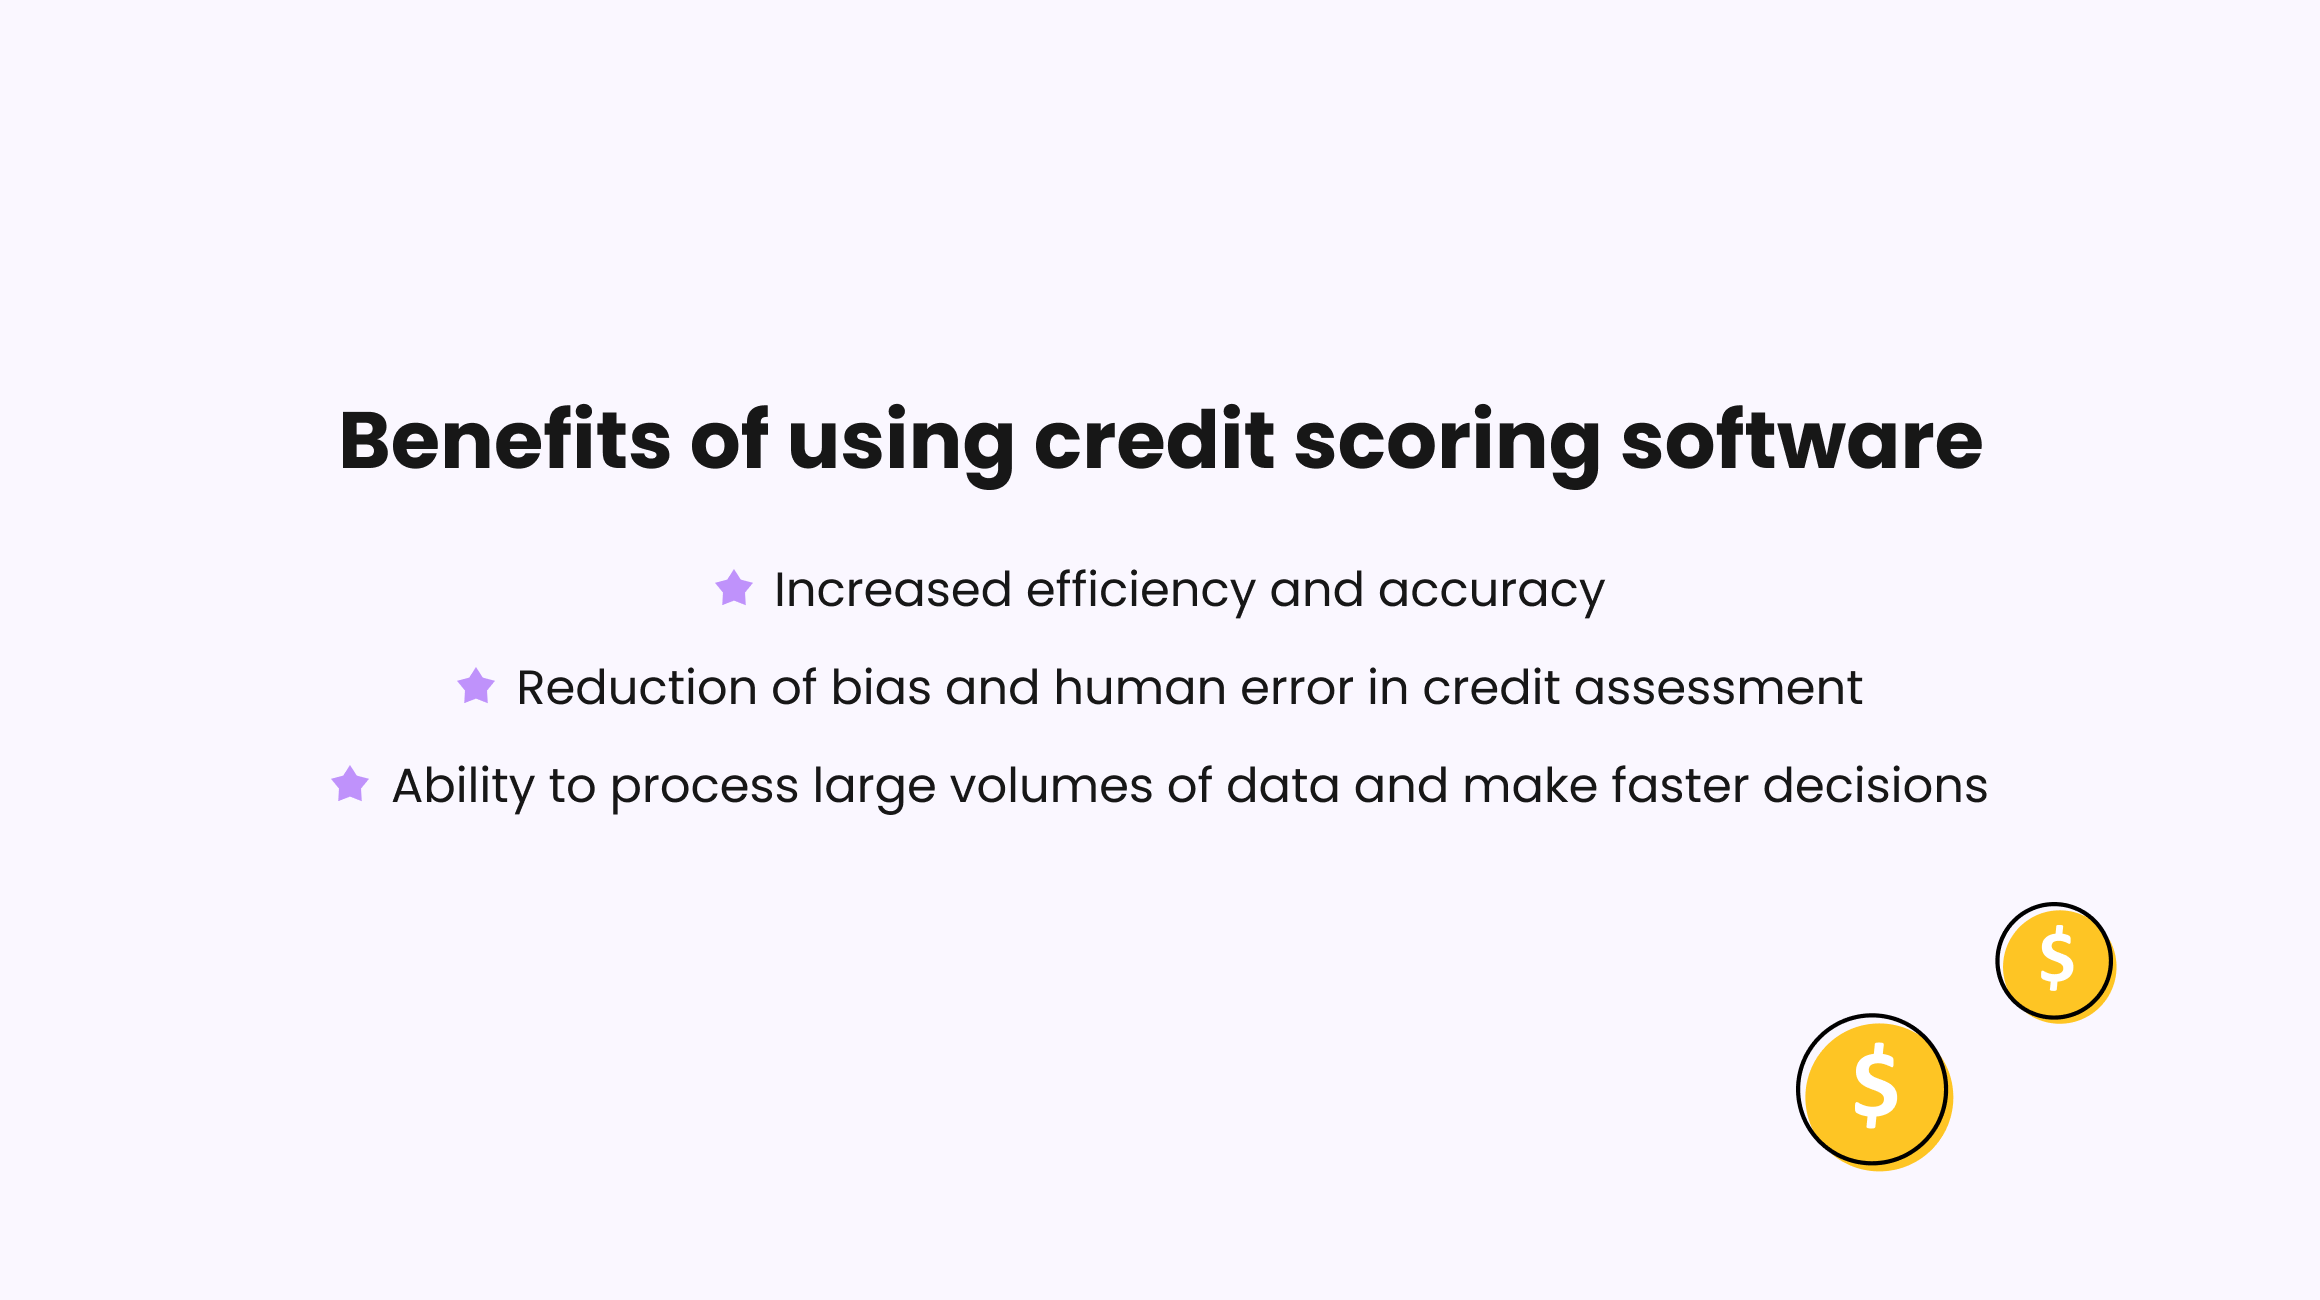 Benefits of credit scoring software